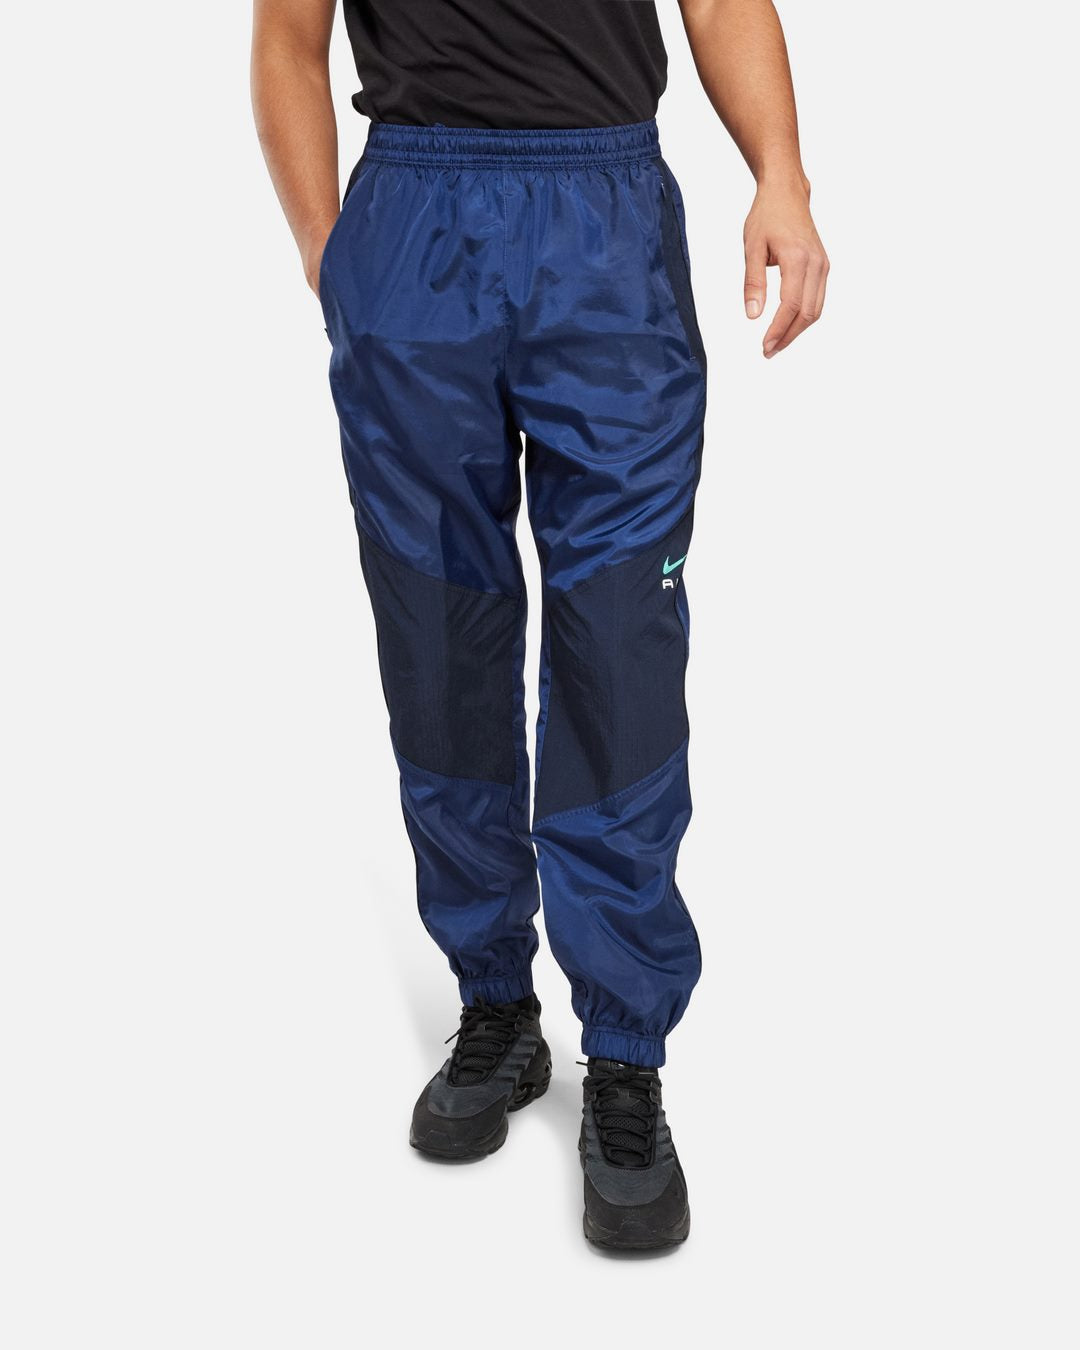 Nike Air Track Pants - Navy Blue